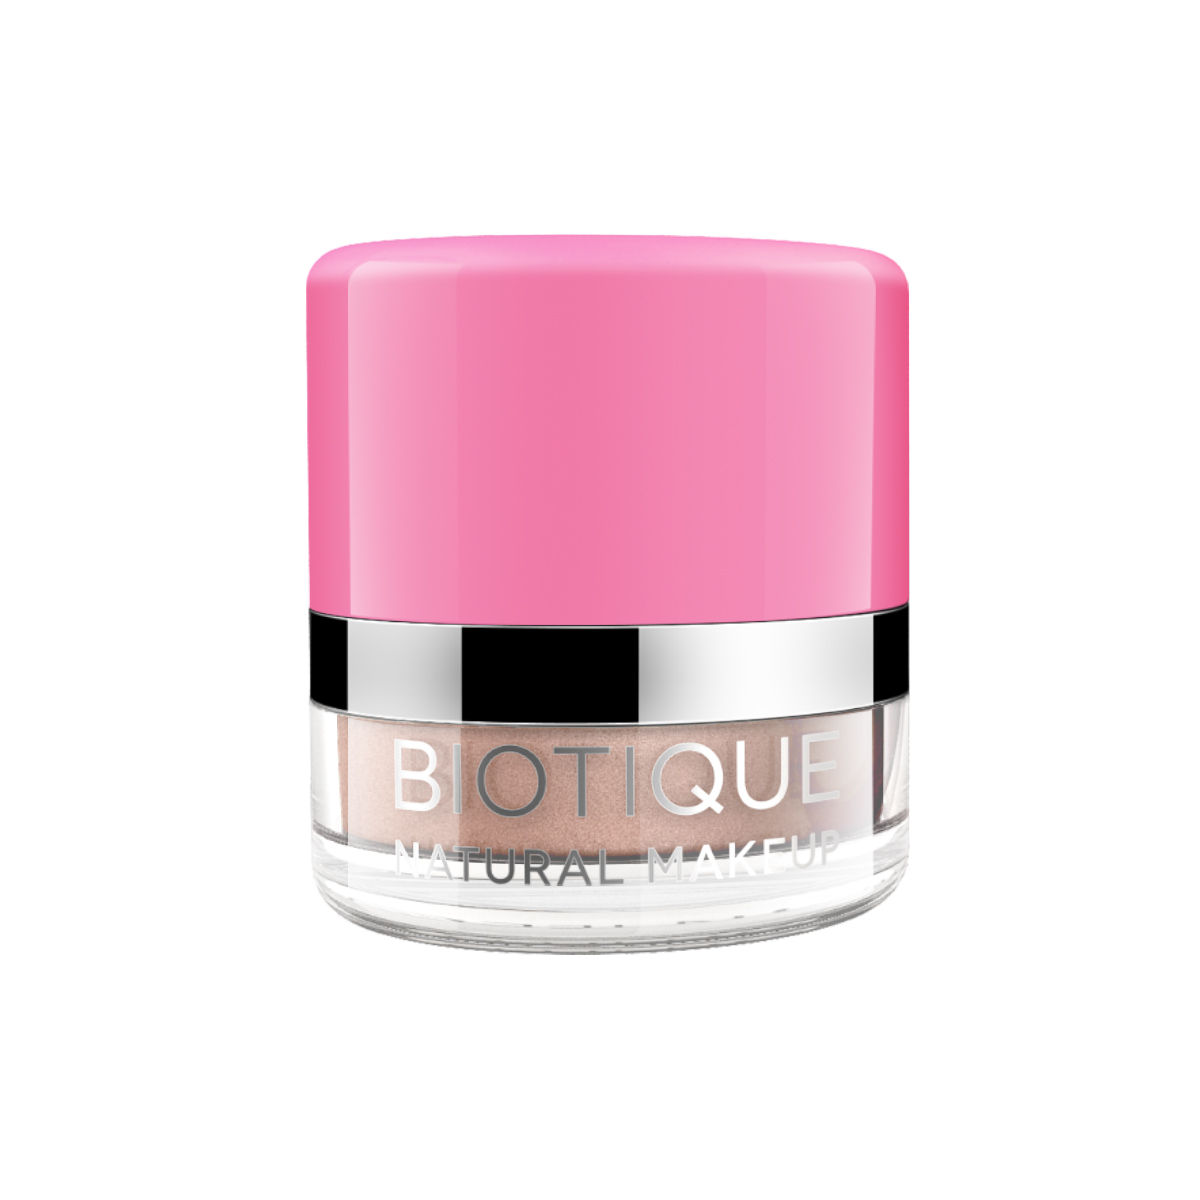 Buy Biotique Natural Makeup Starglow Sheer Skin Illuminator (Rose-N-Quartz)(4 g) - Purplle